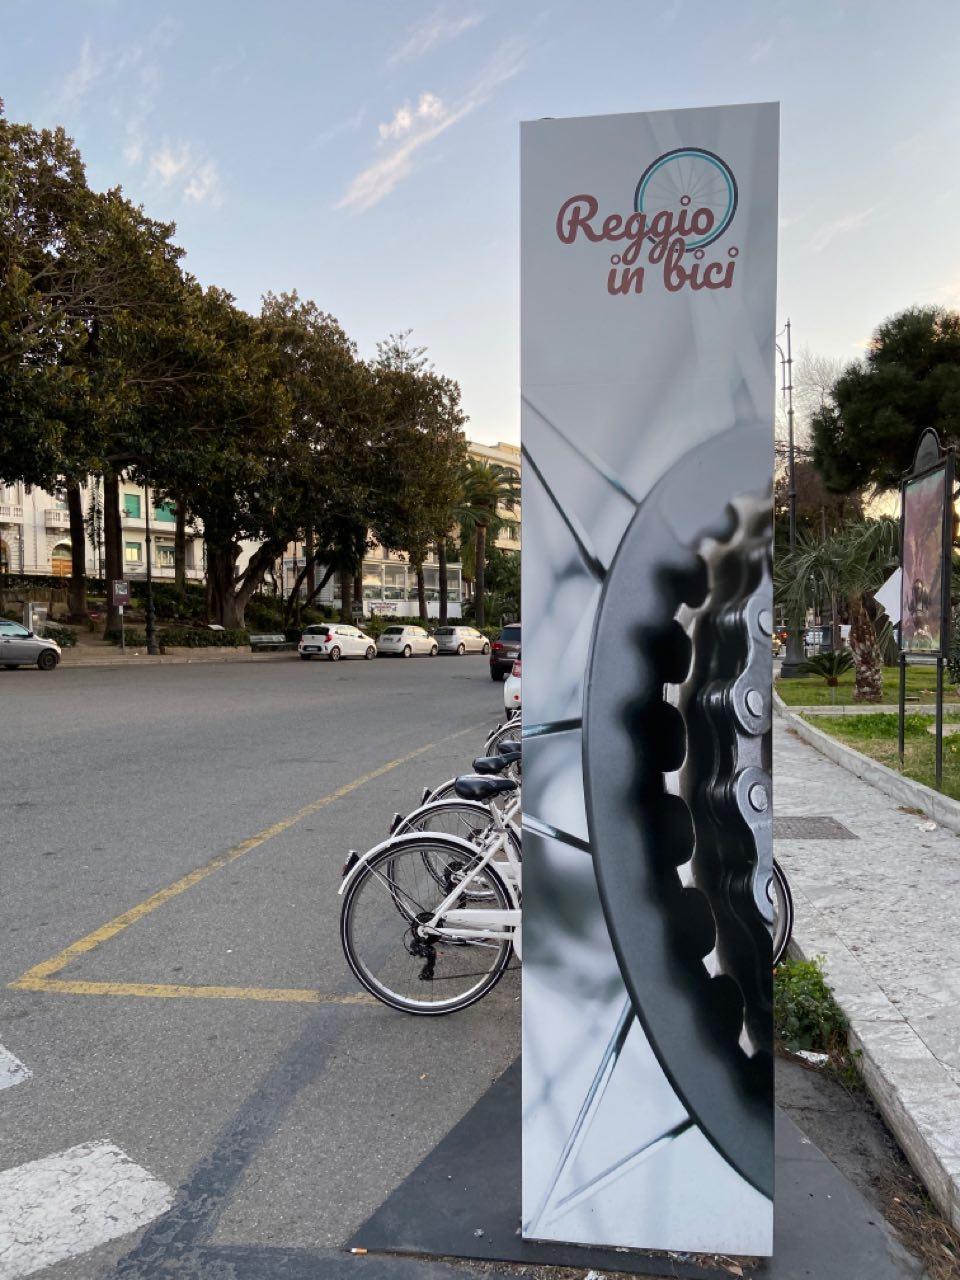 Reggio Calabria in Bici - stazioni bike sharing